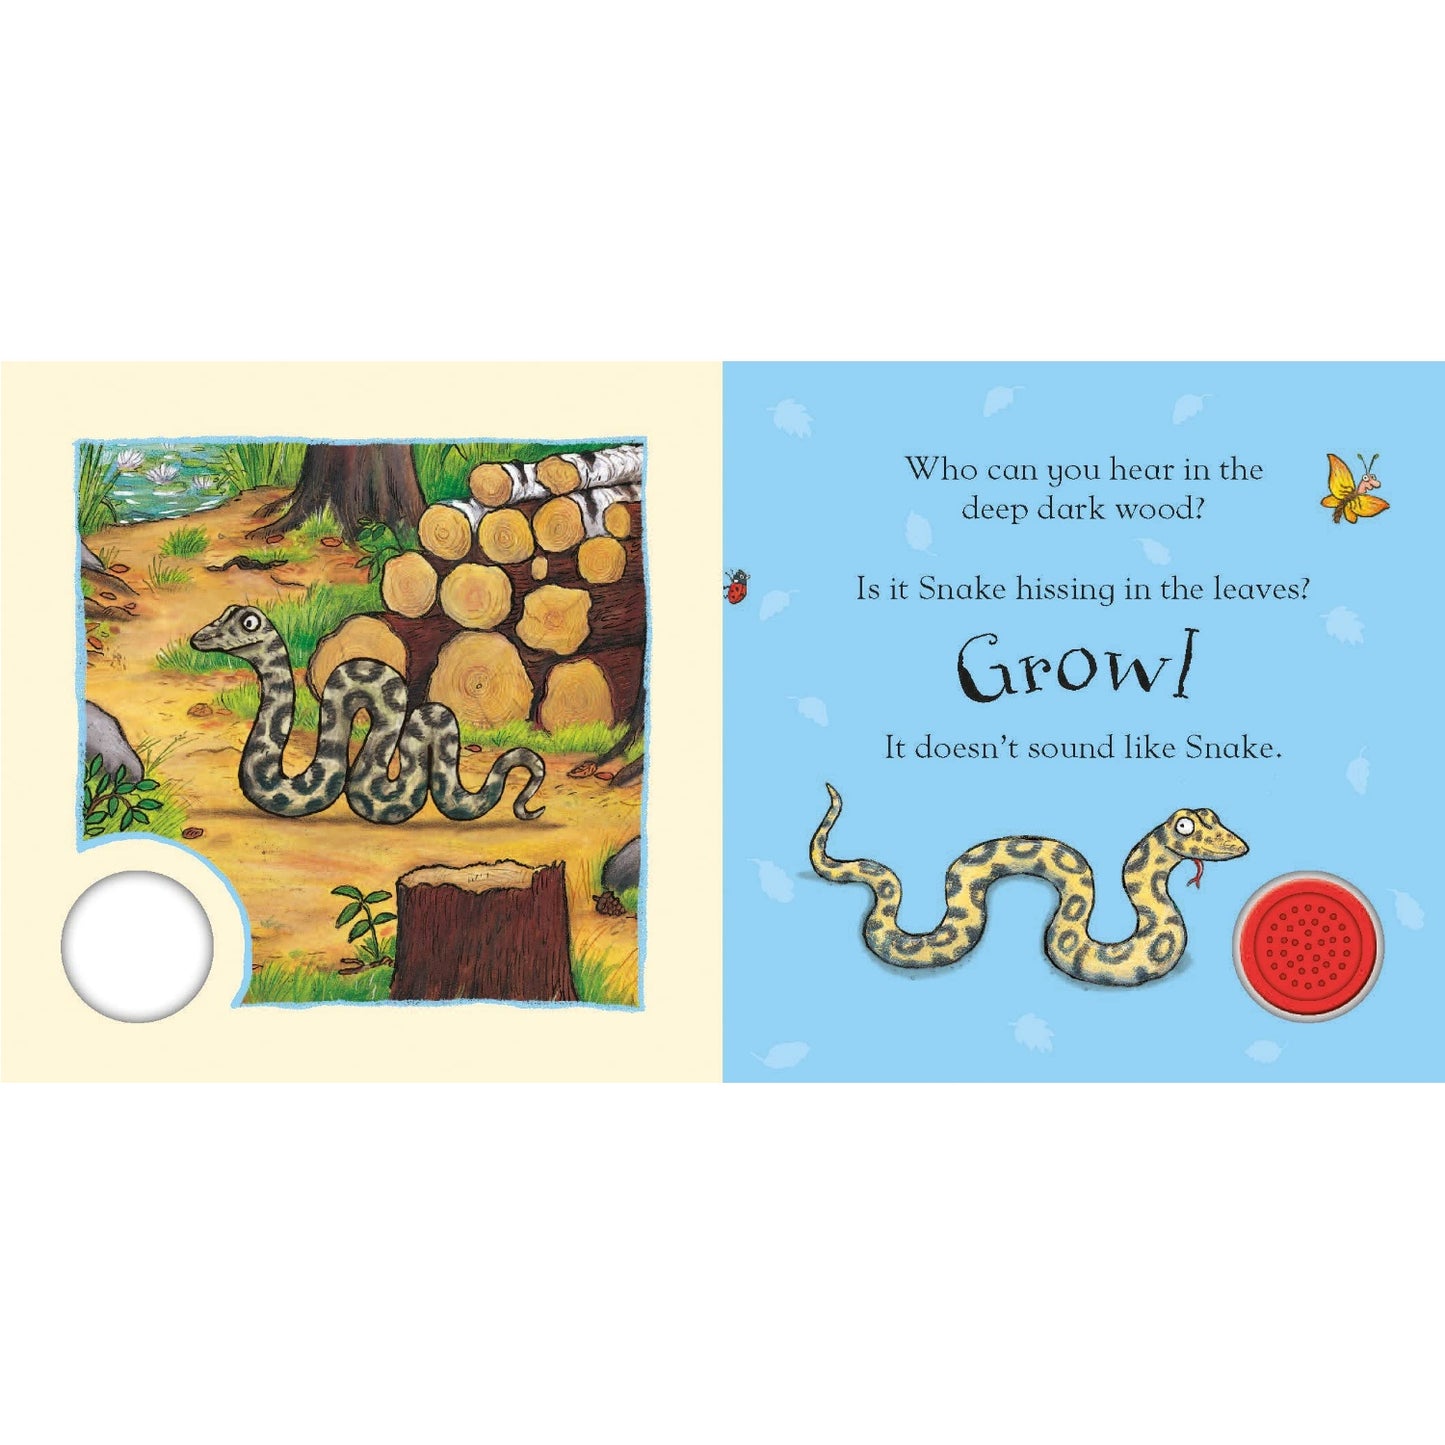 Gruffalo Growl - My First Gruffalo | Board Book for Babies & Toddlers